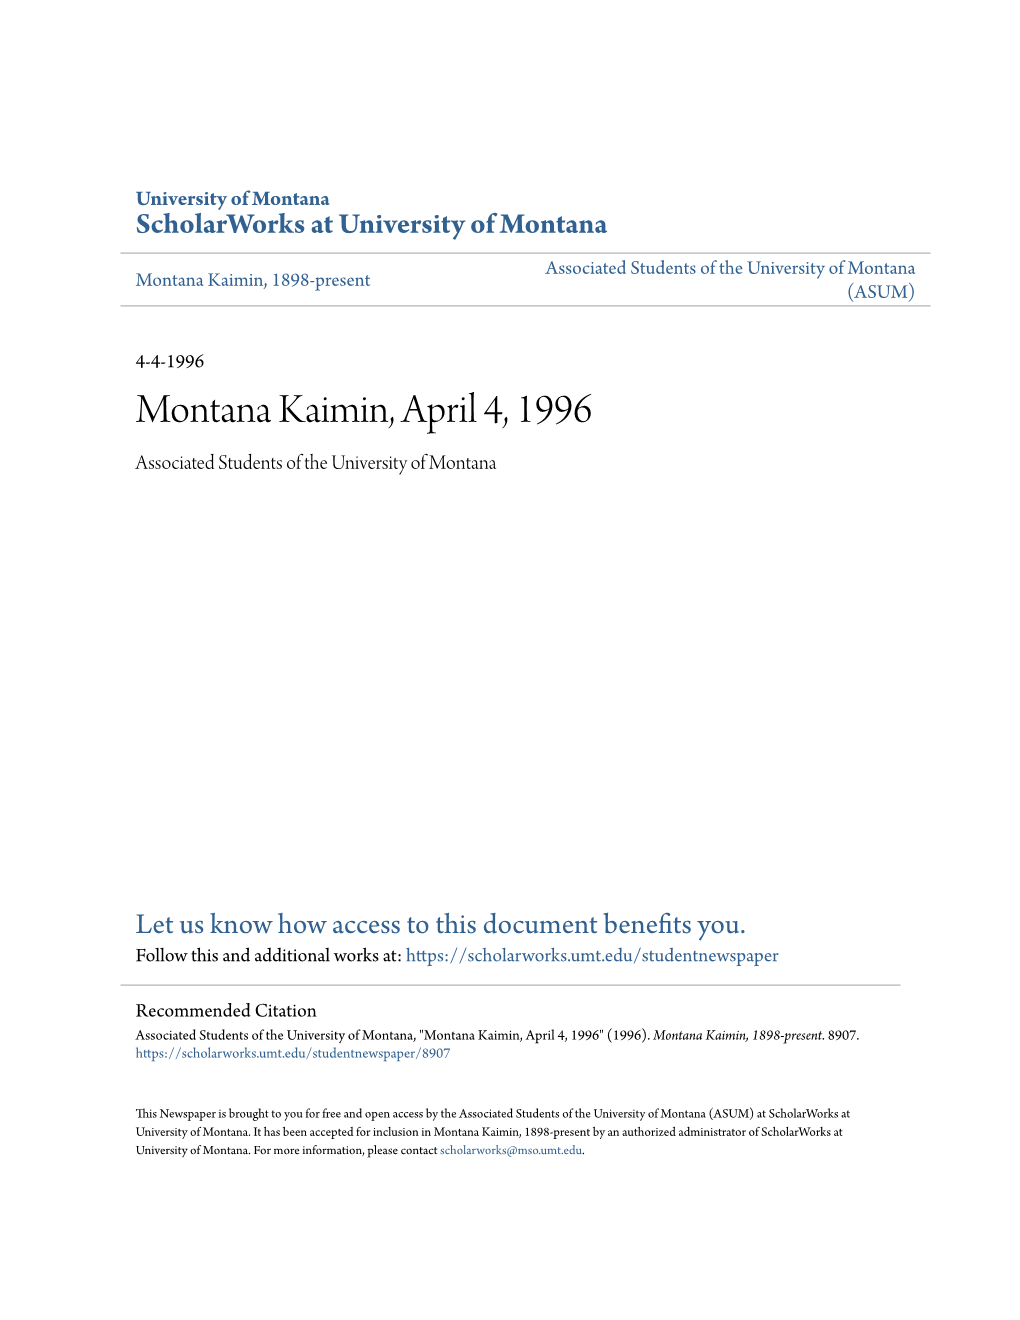 Montana Kaimin, April 4, 1996 Associated Students of the University of Montana